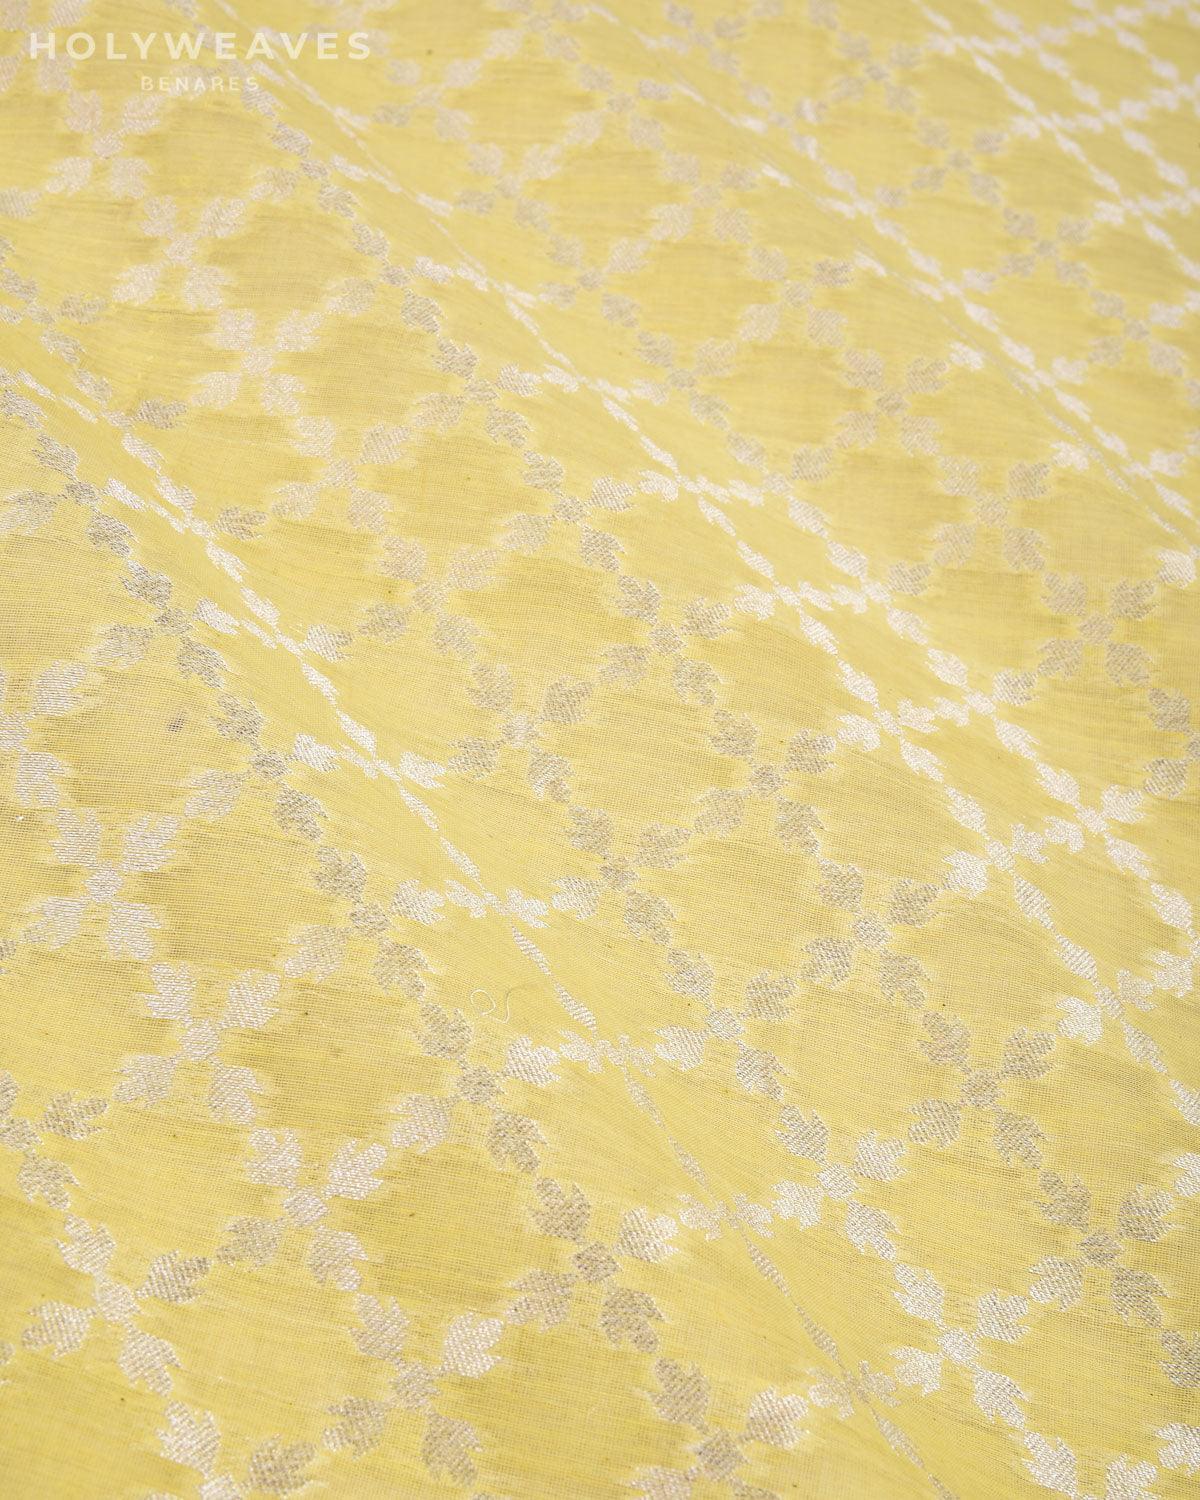 Lime Green Banarasi Light Gold Jangla Cutwork Brocade Handwoven Cotton Silk Fabric - By HolyWeaves, Benares